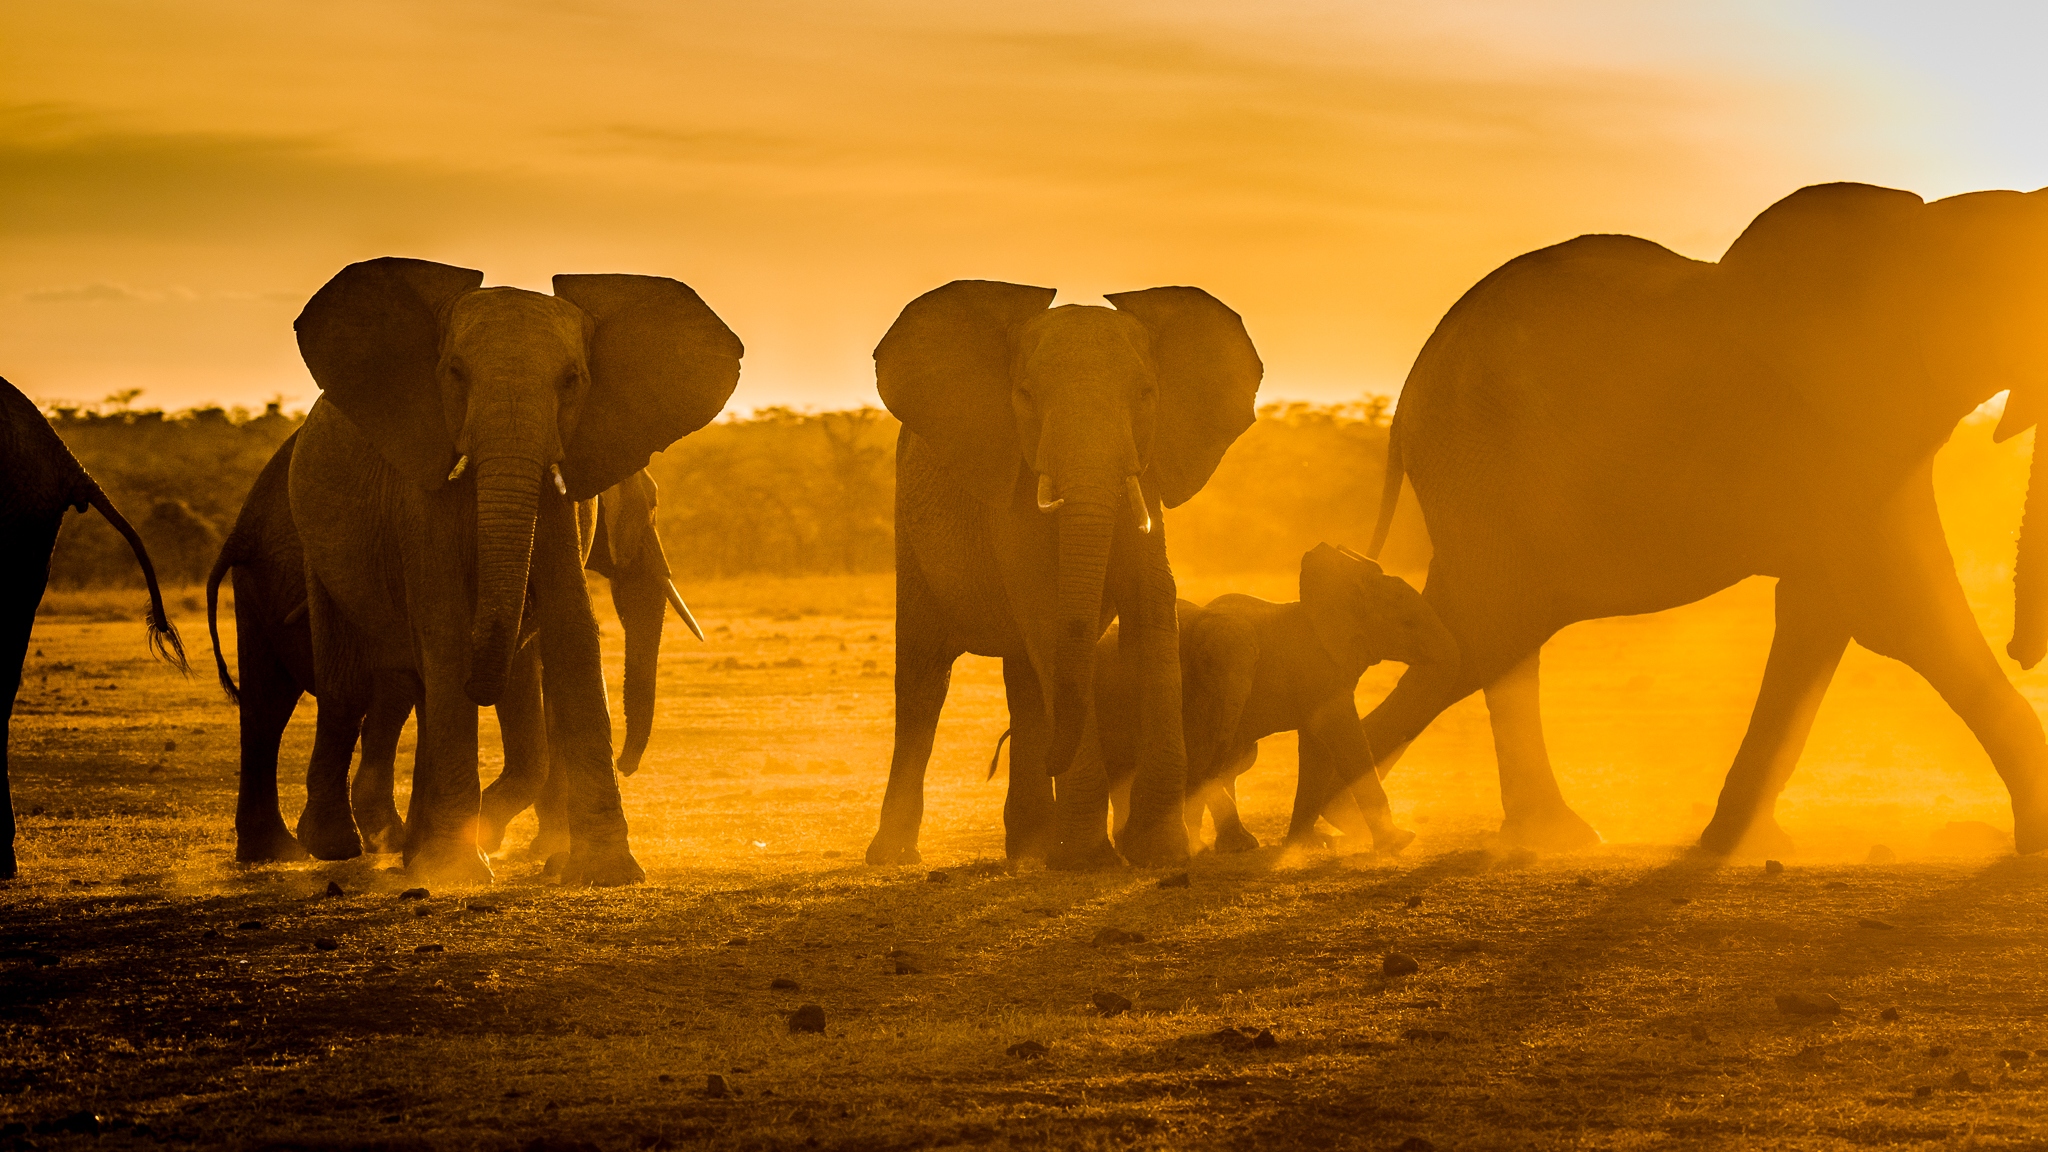 General 2048x1152 nature animals depth of field elephant Africa baby animals sunlight wildlife dust